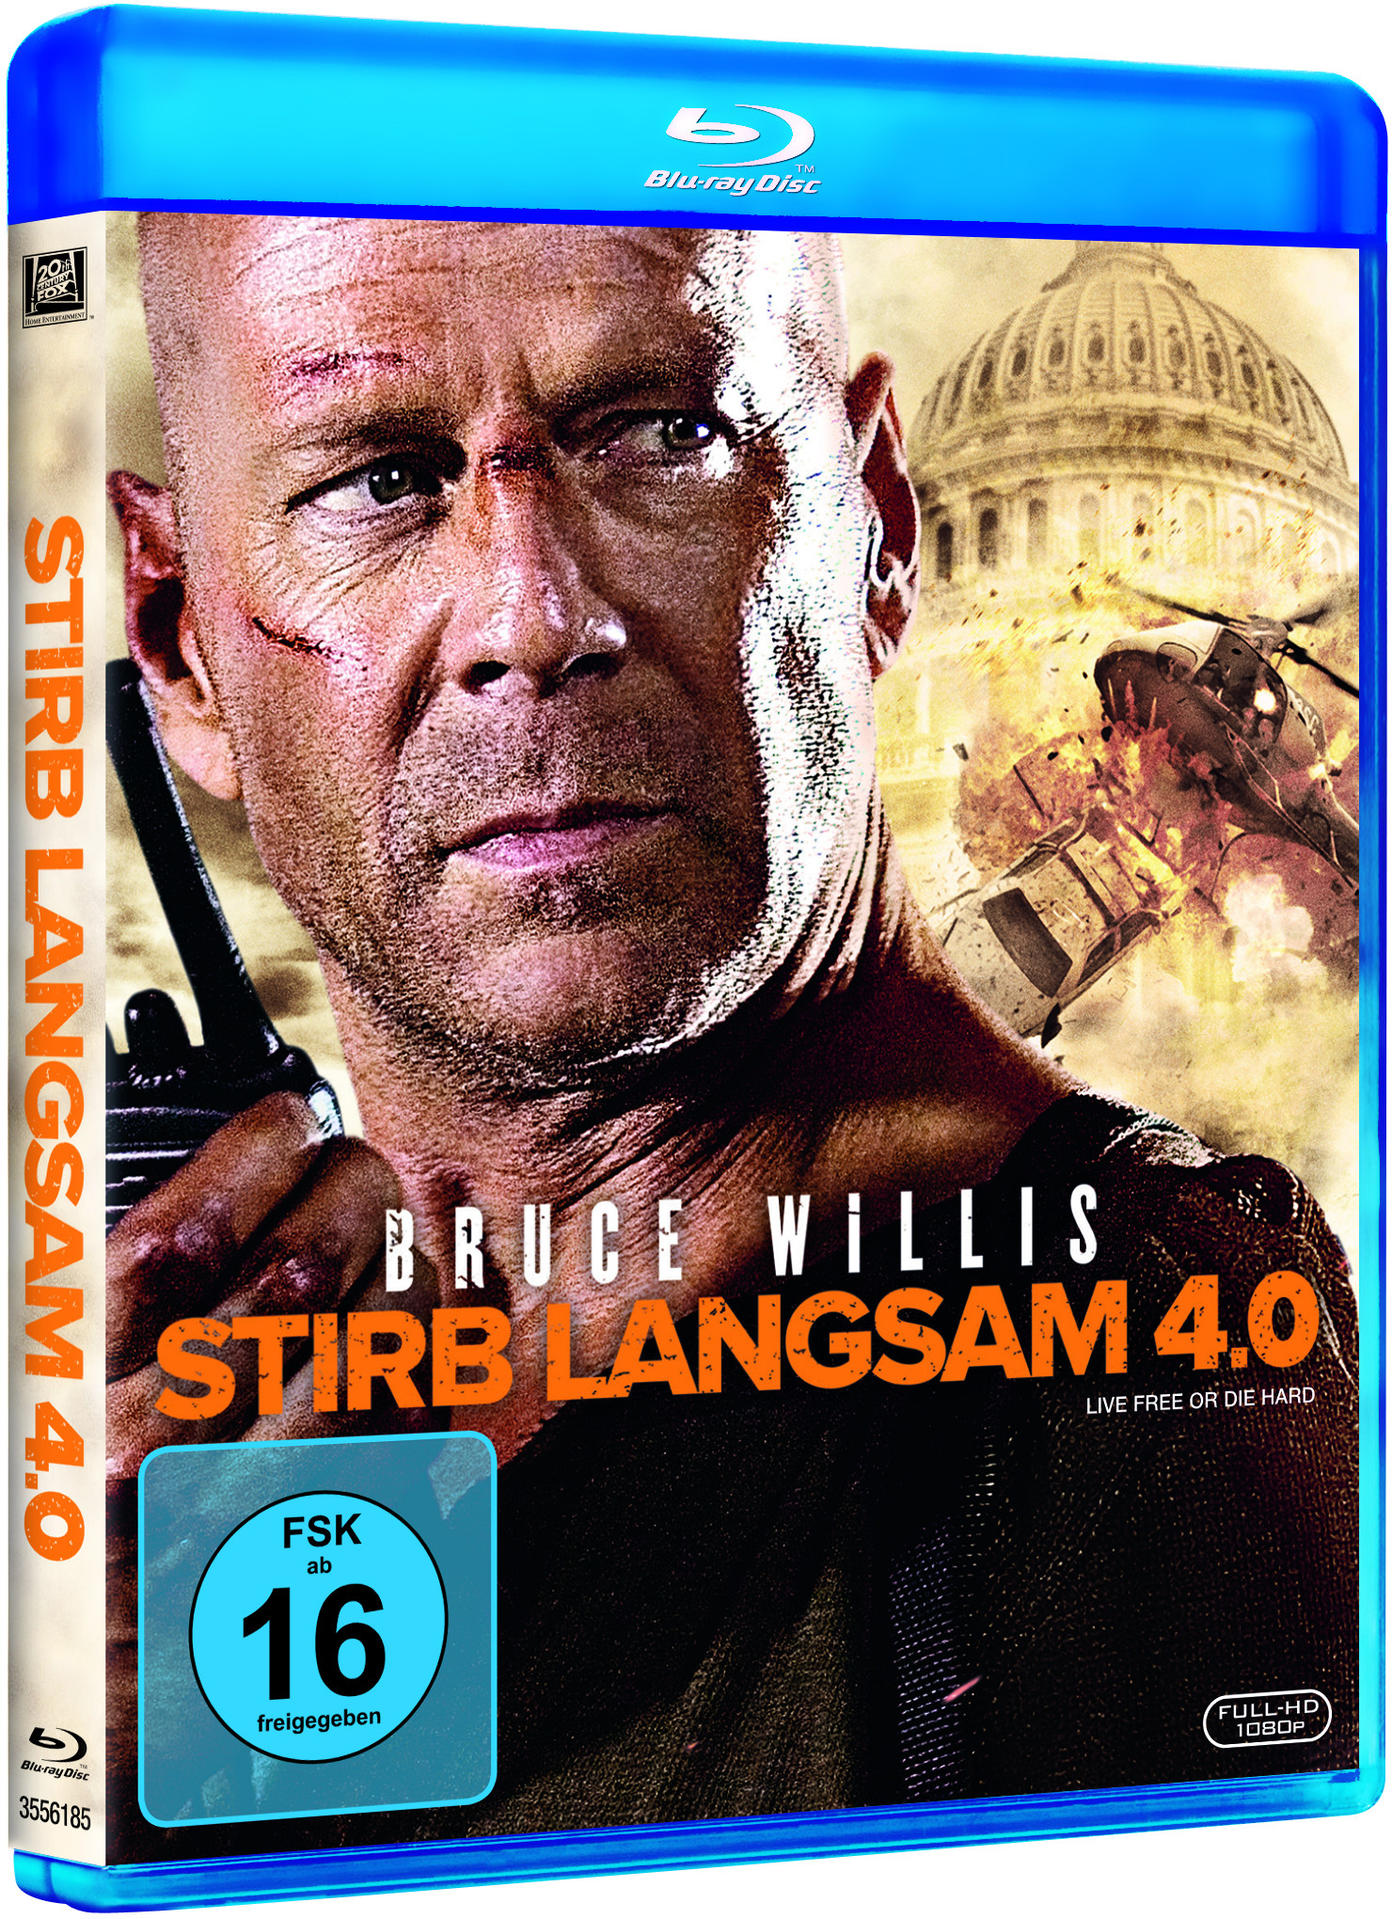 4.0 Langsam Stirb Blu-ray